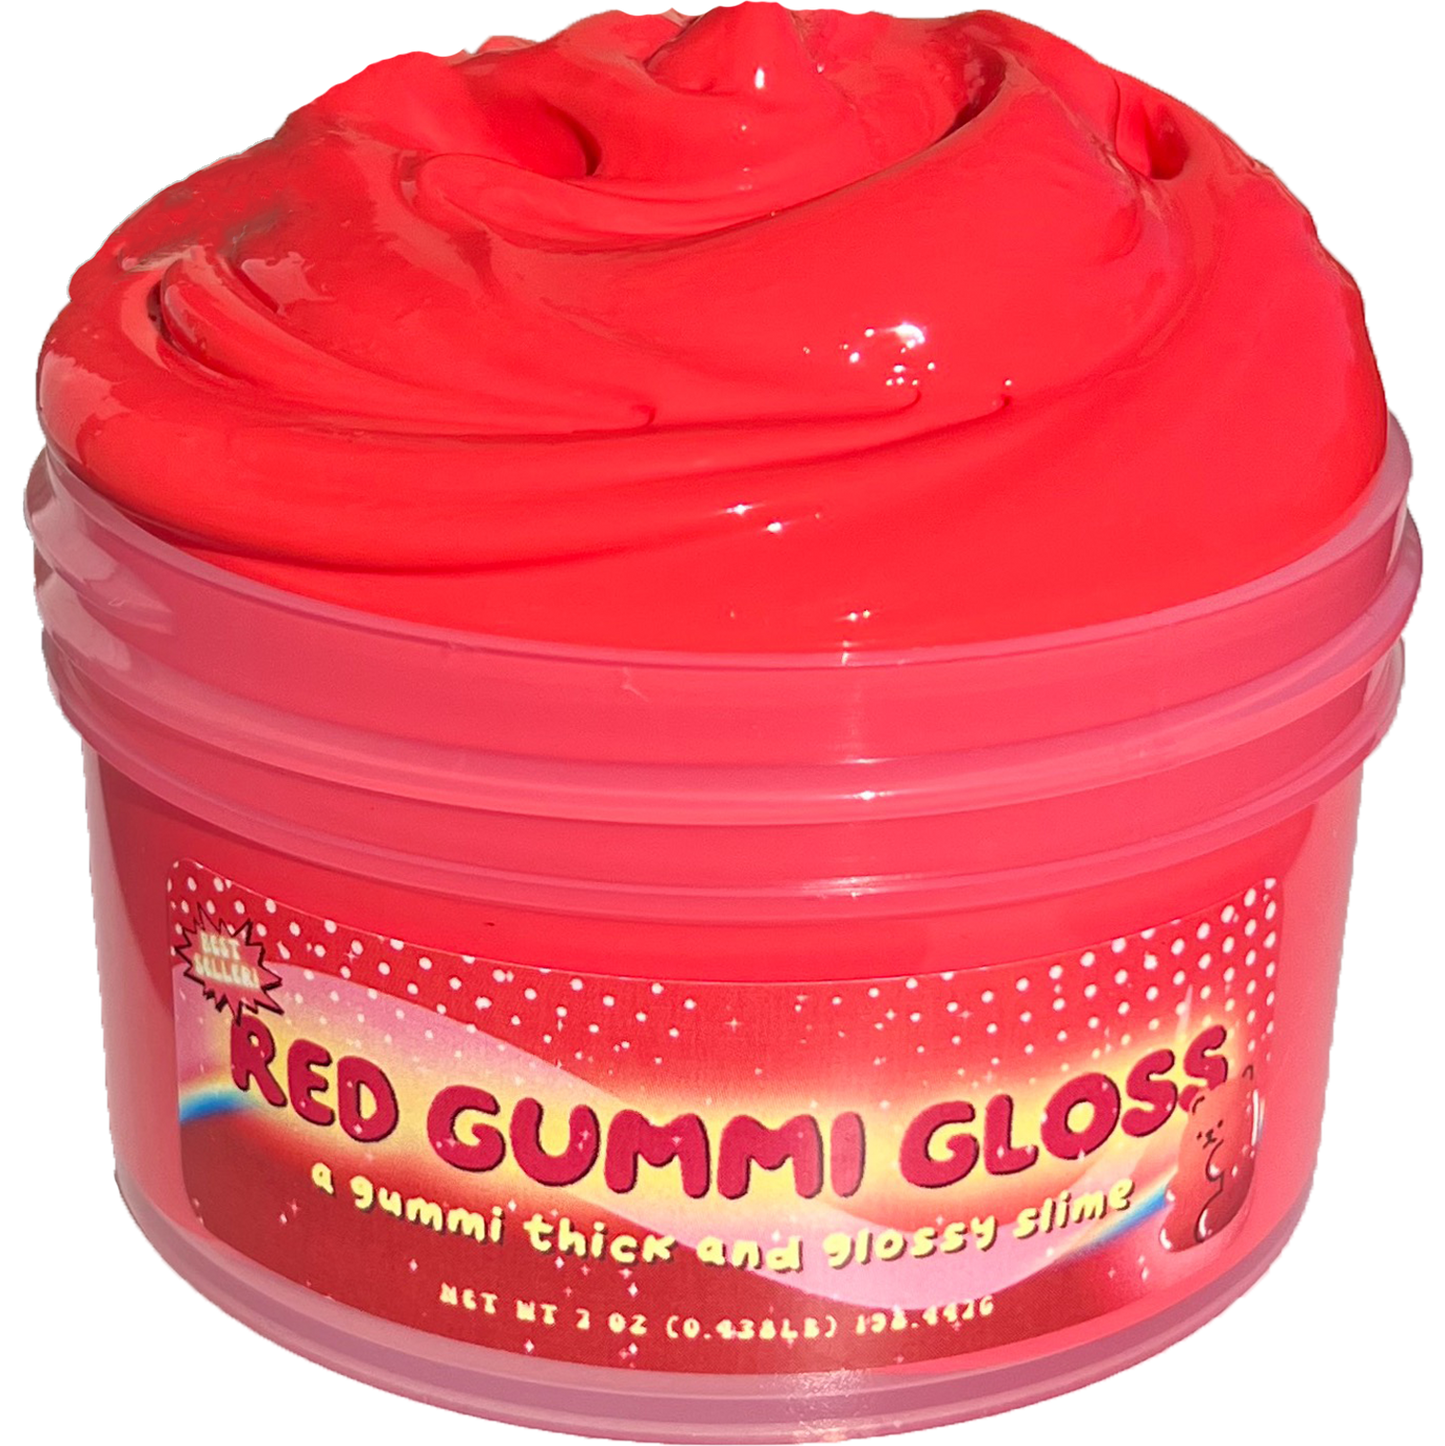 Red Gummi Gloss